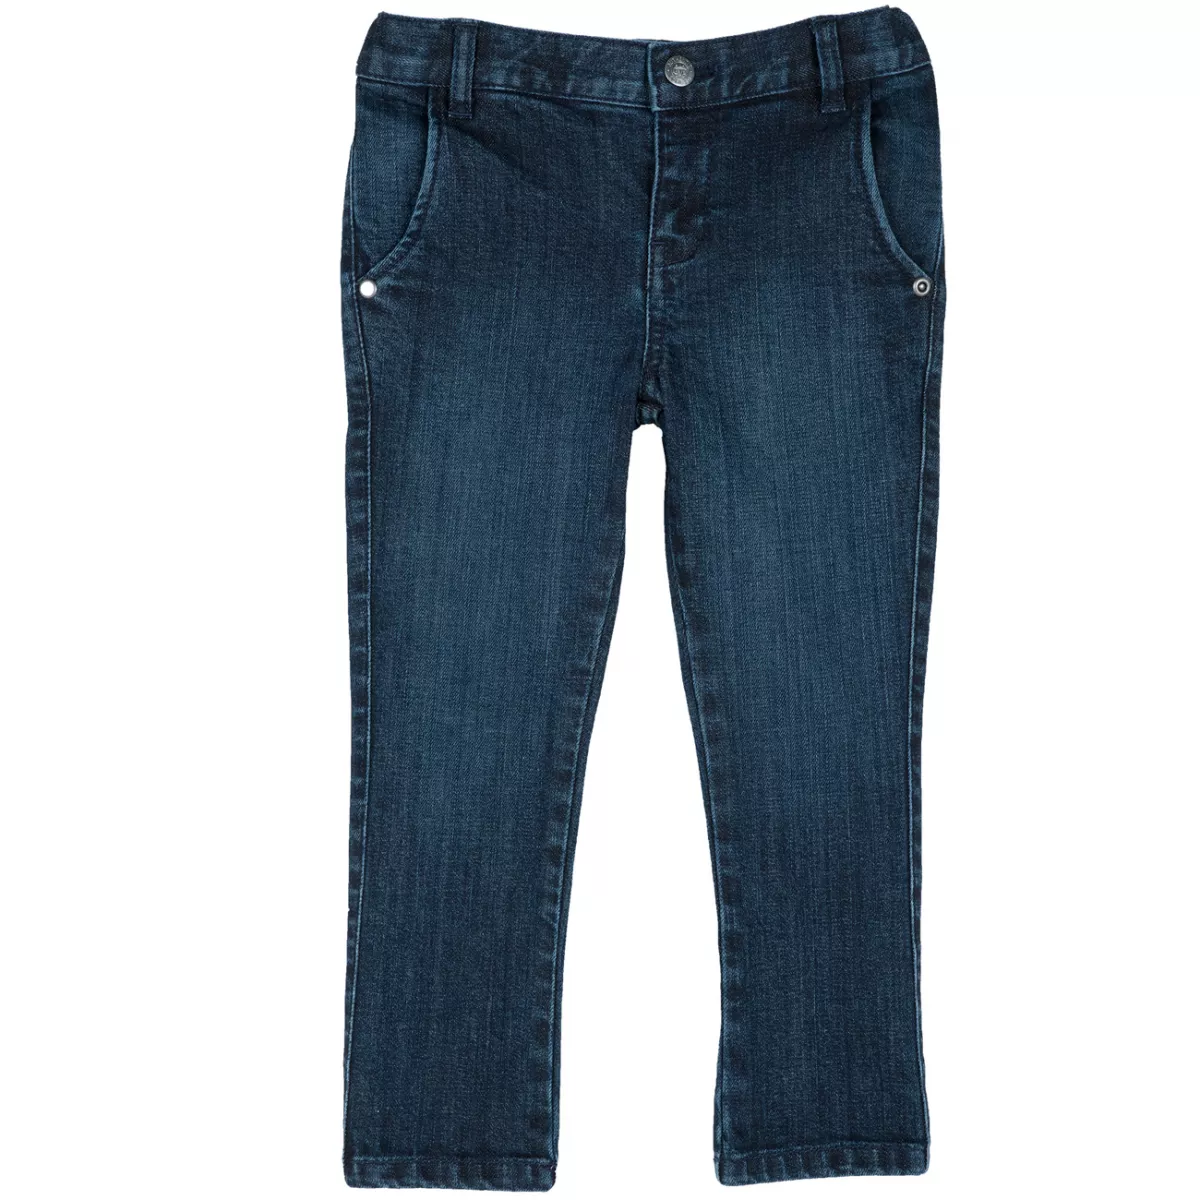 Pantaloni jeans copii Chicco, albastru inchis, 98